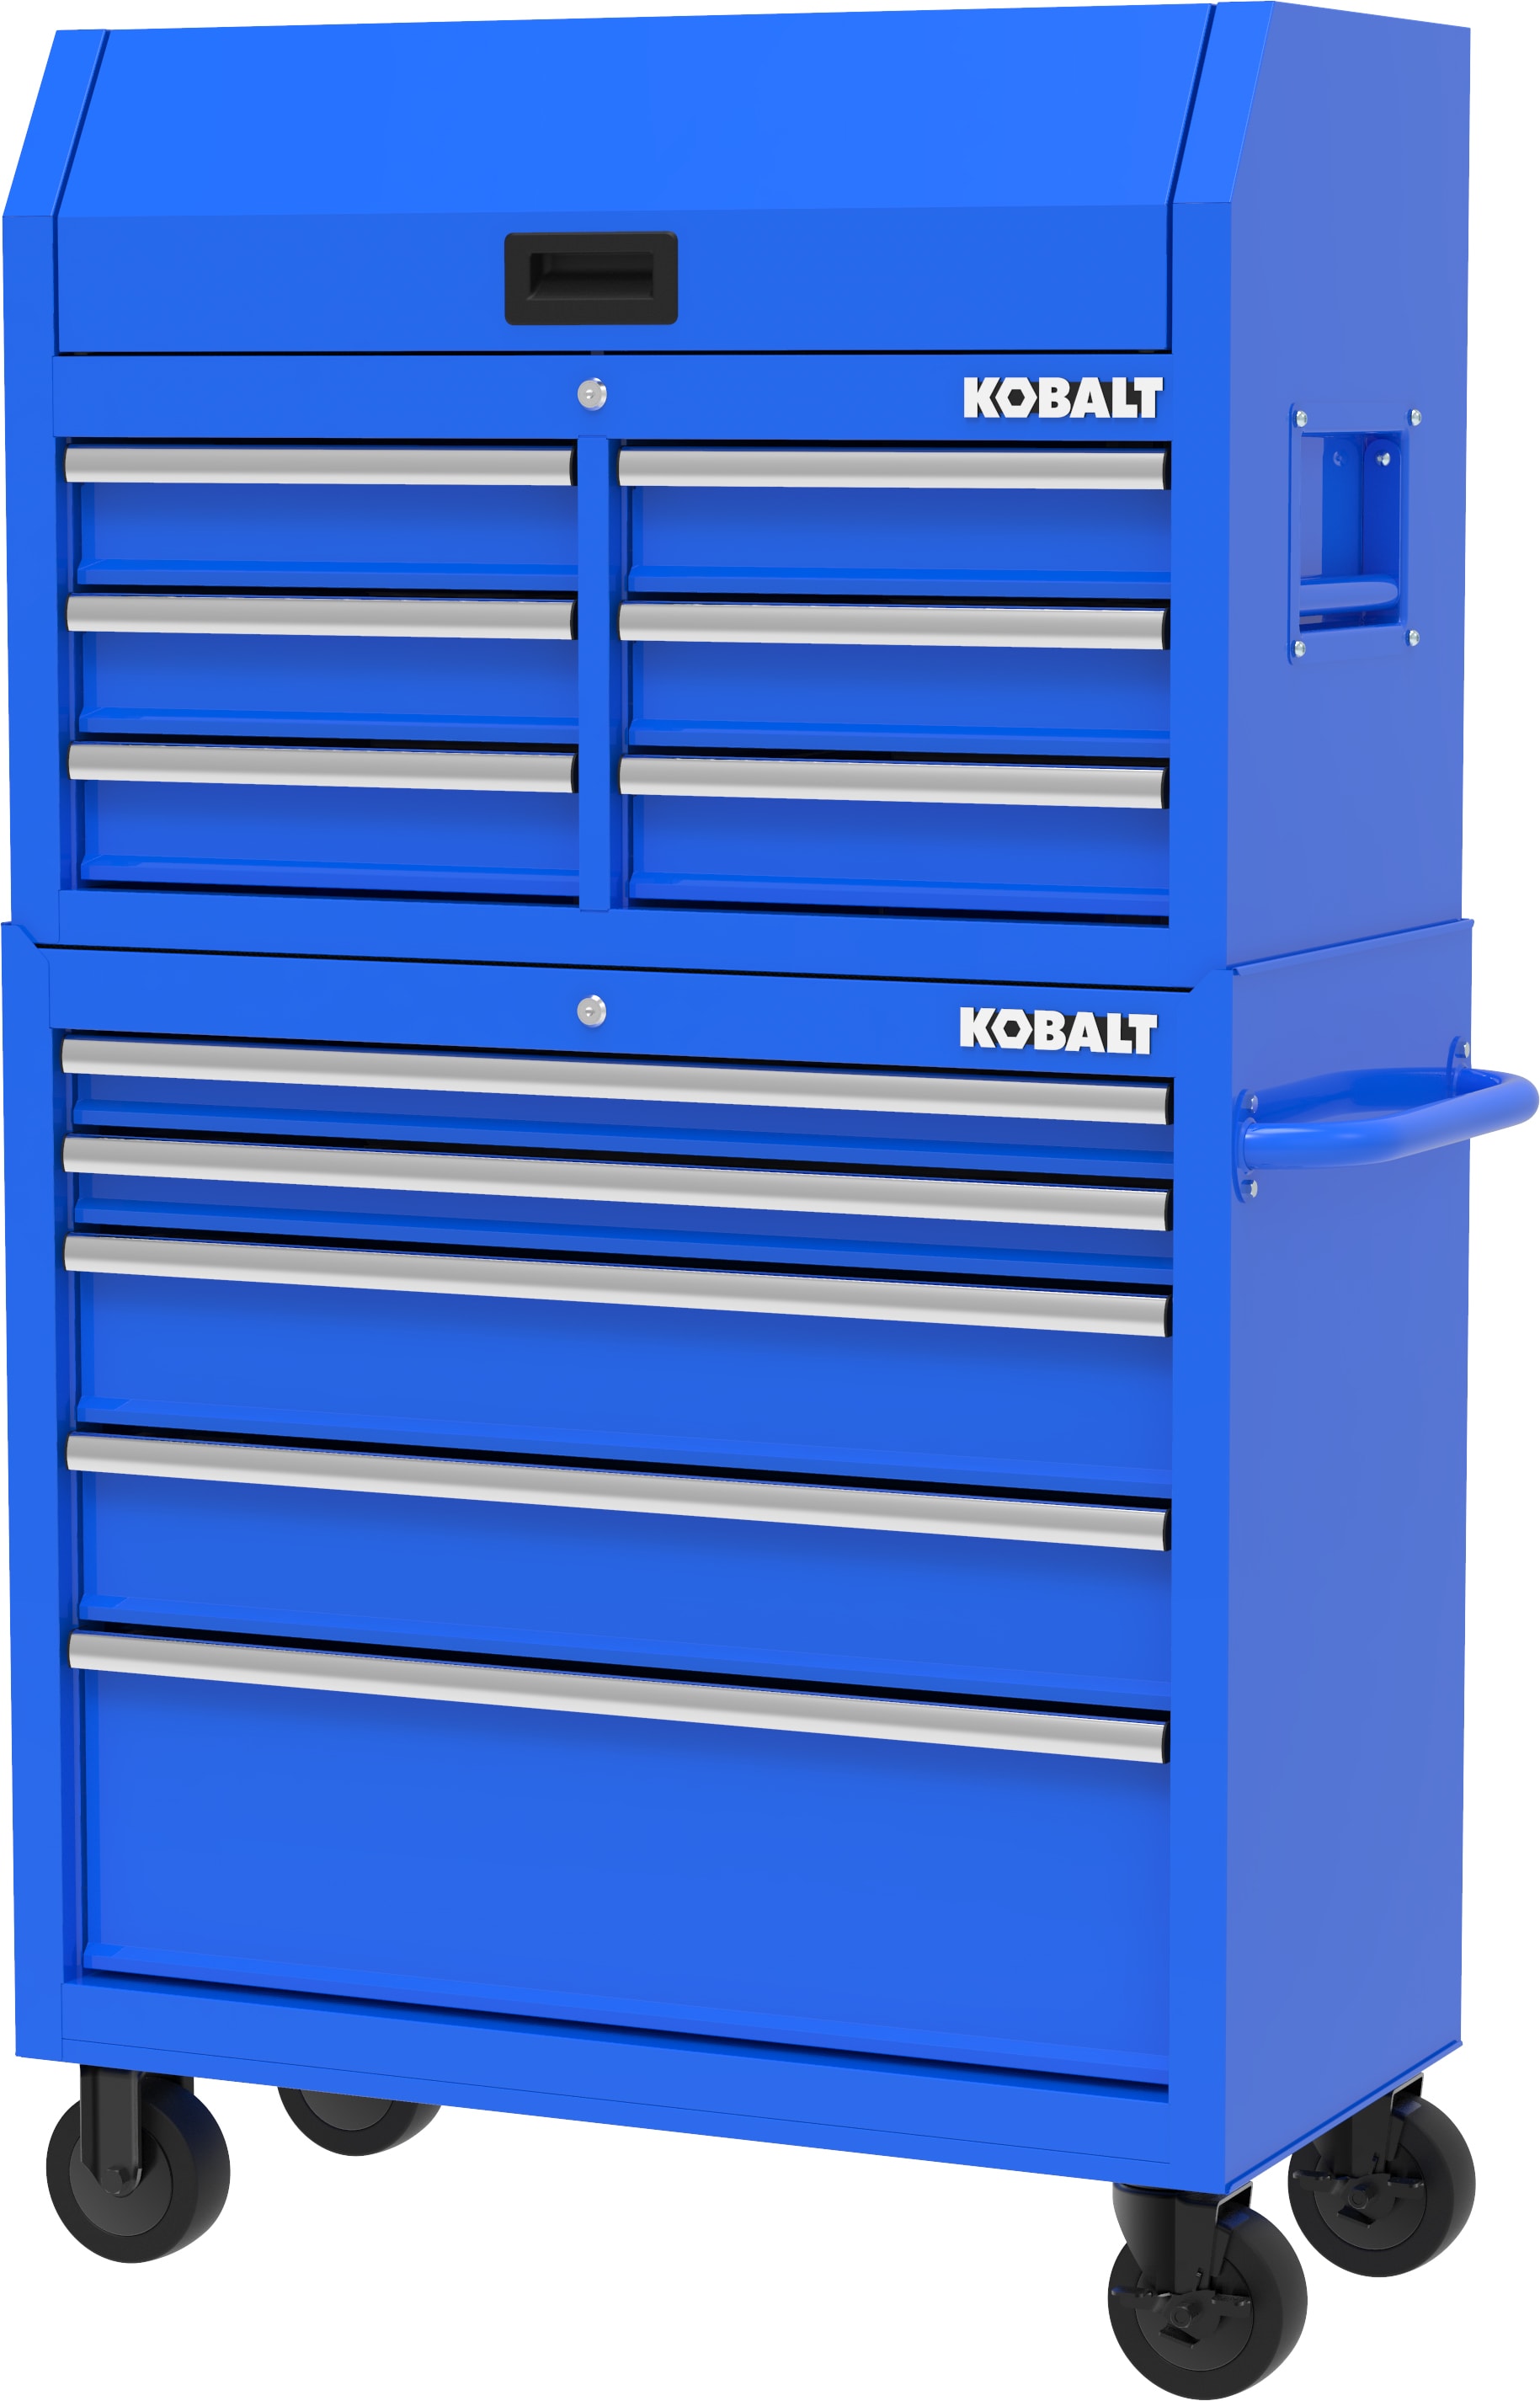 Lowe's Kobalt Mini Toolbox Gridfinity Inserts : r/3Dprinting